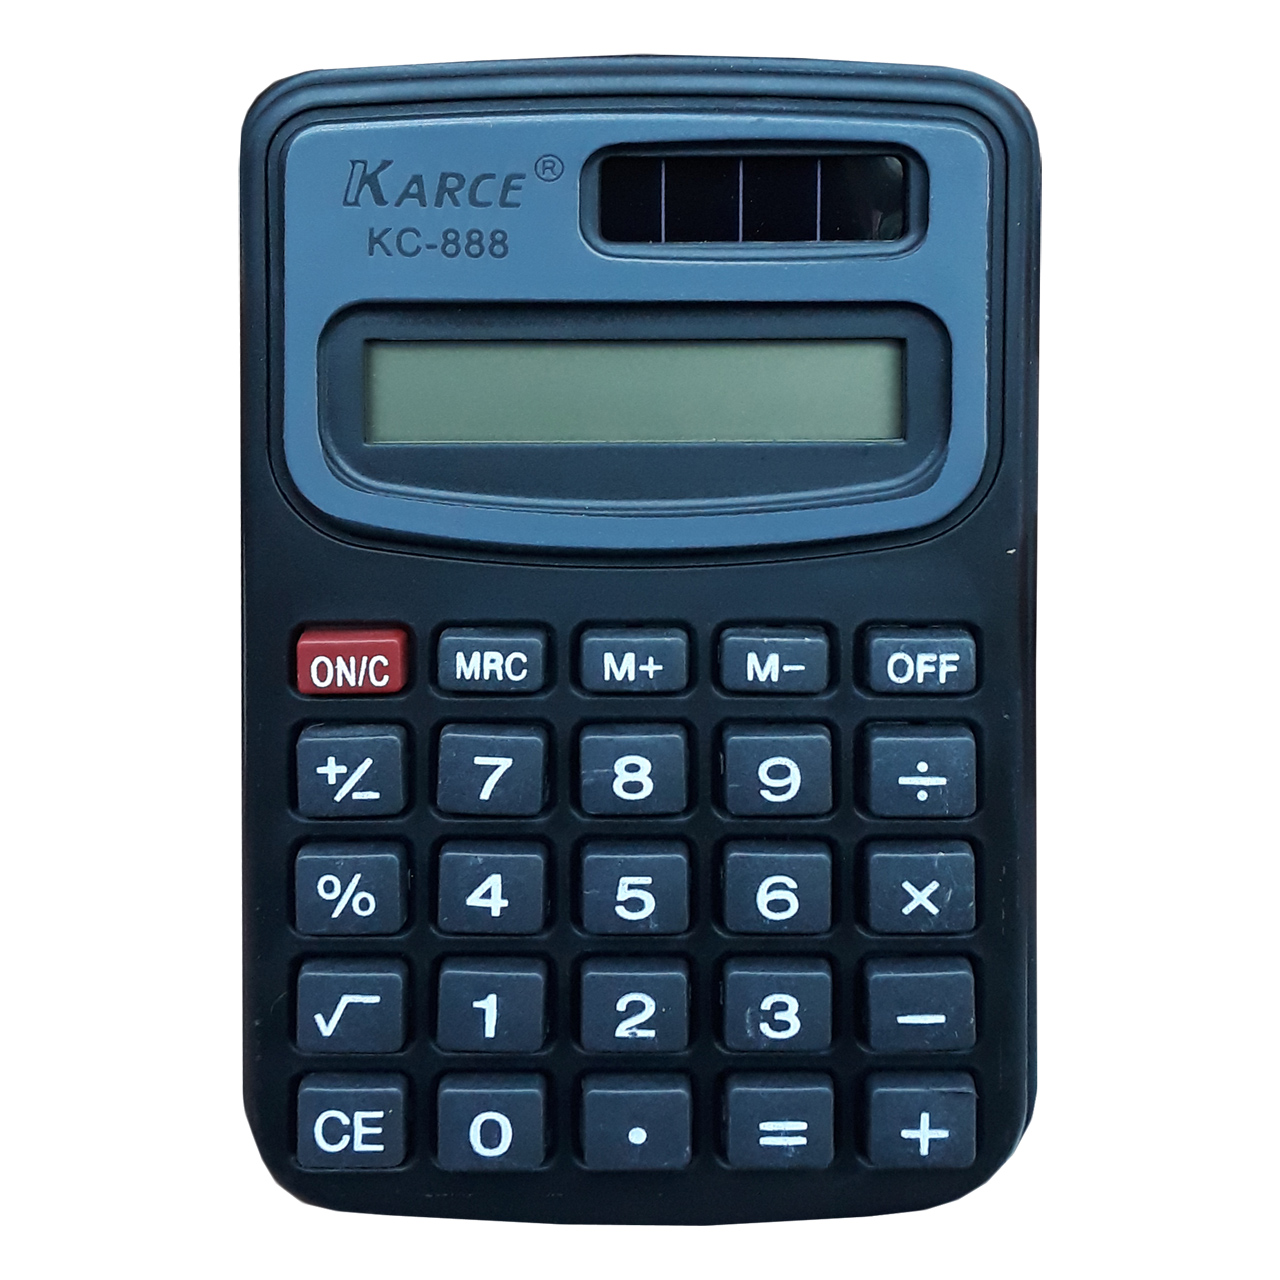 ماشین حساب کارسی مدل Kc-888